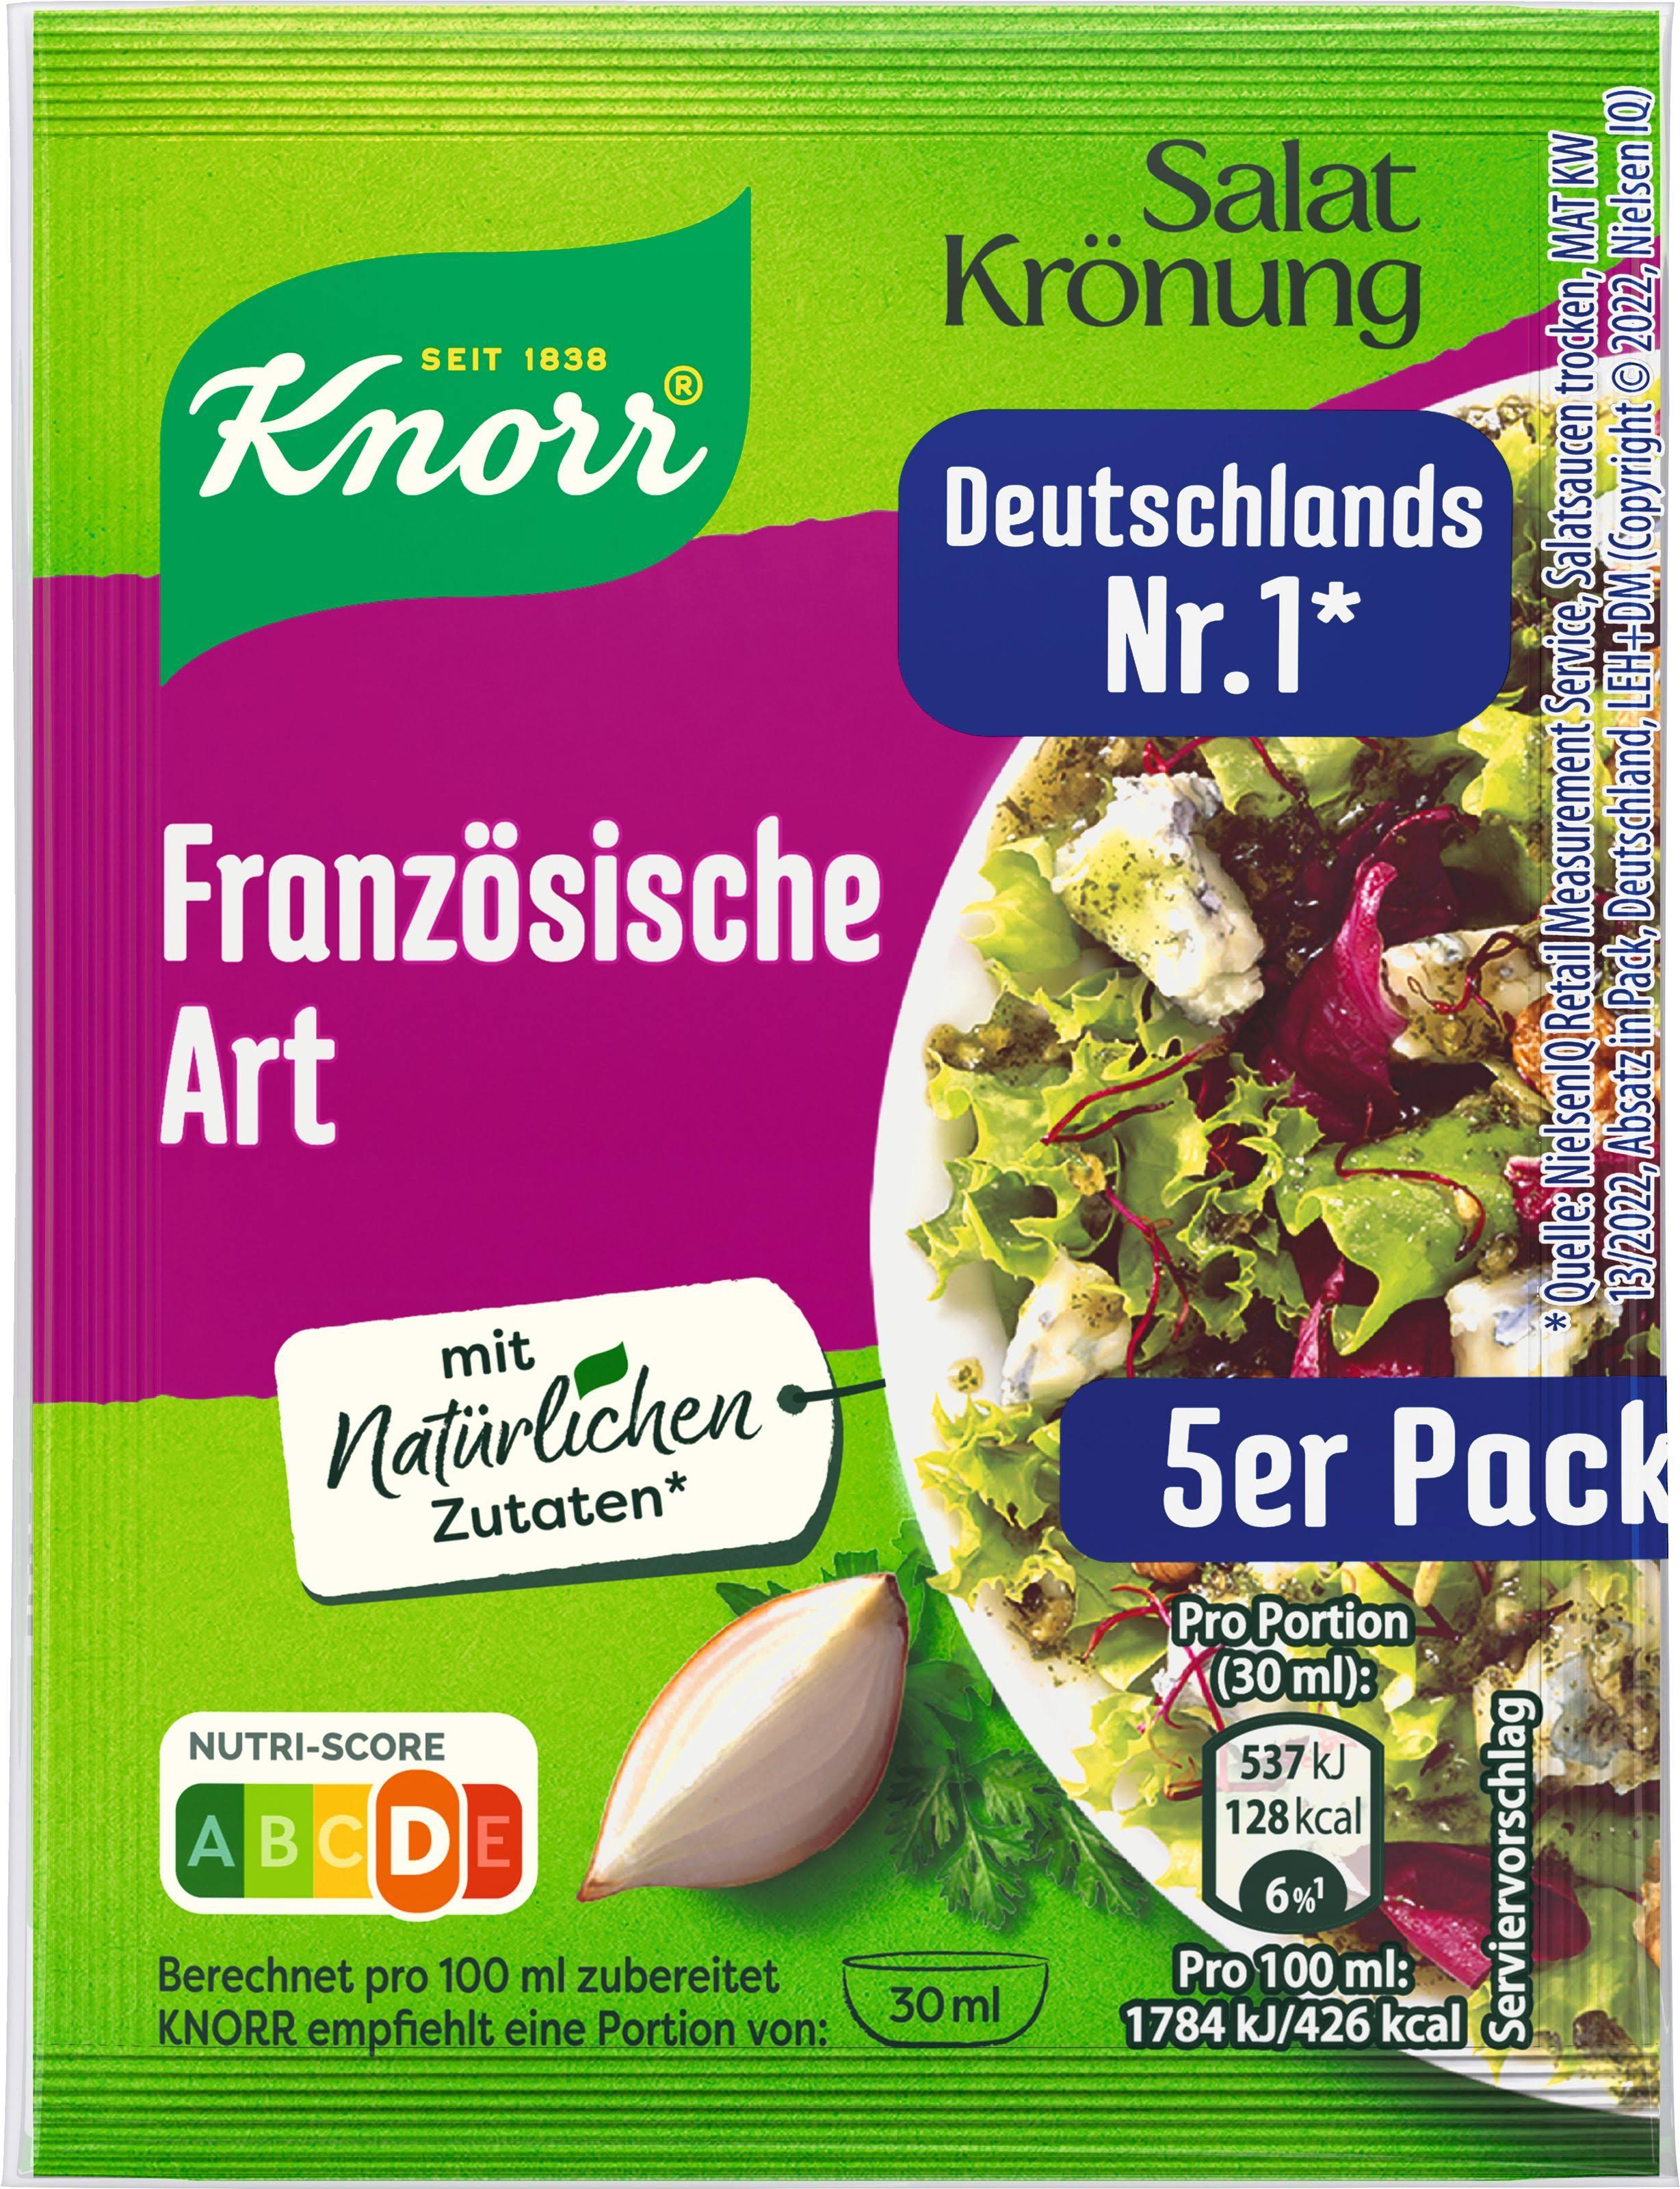 Knorr Franzosische Art (French-style Salad Dressing)